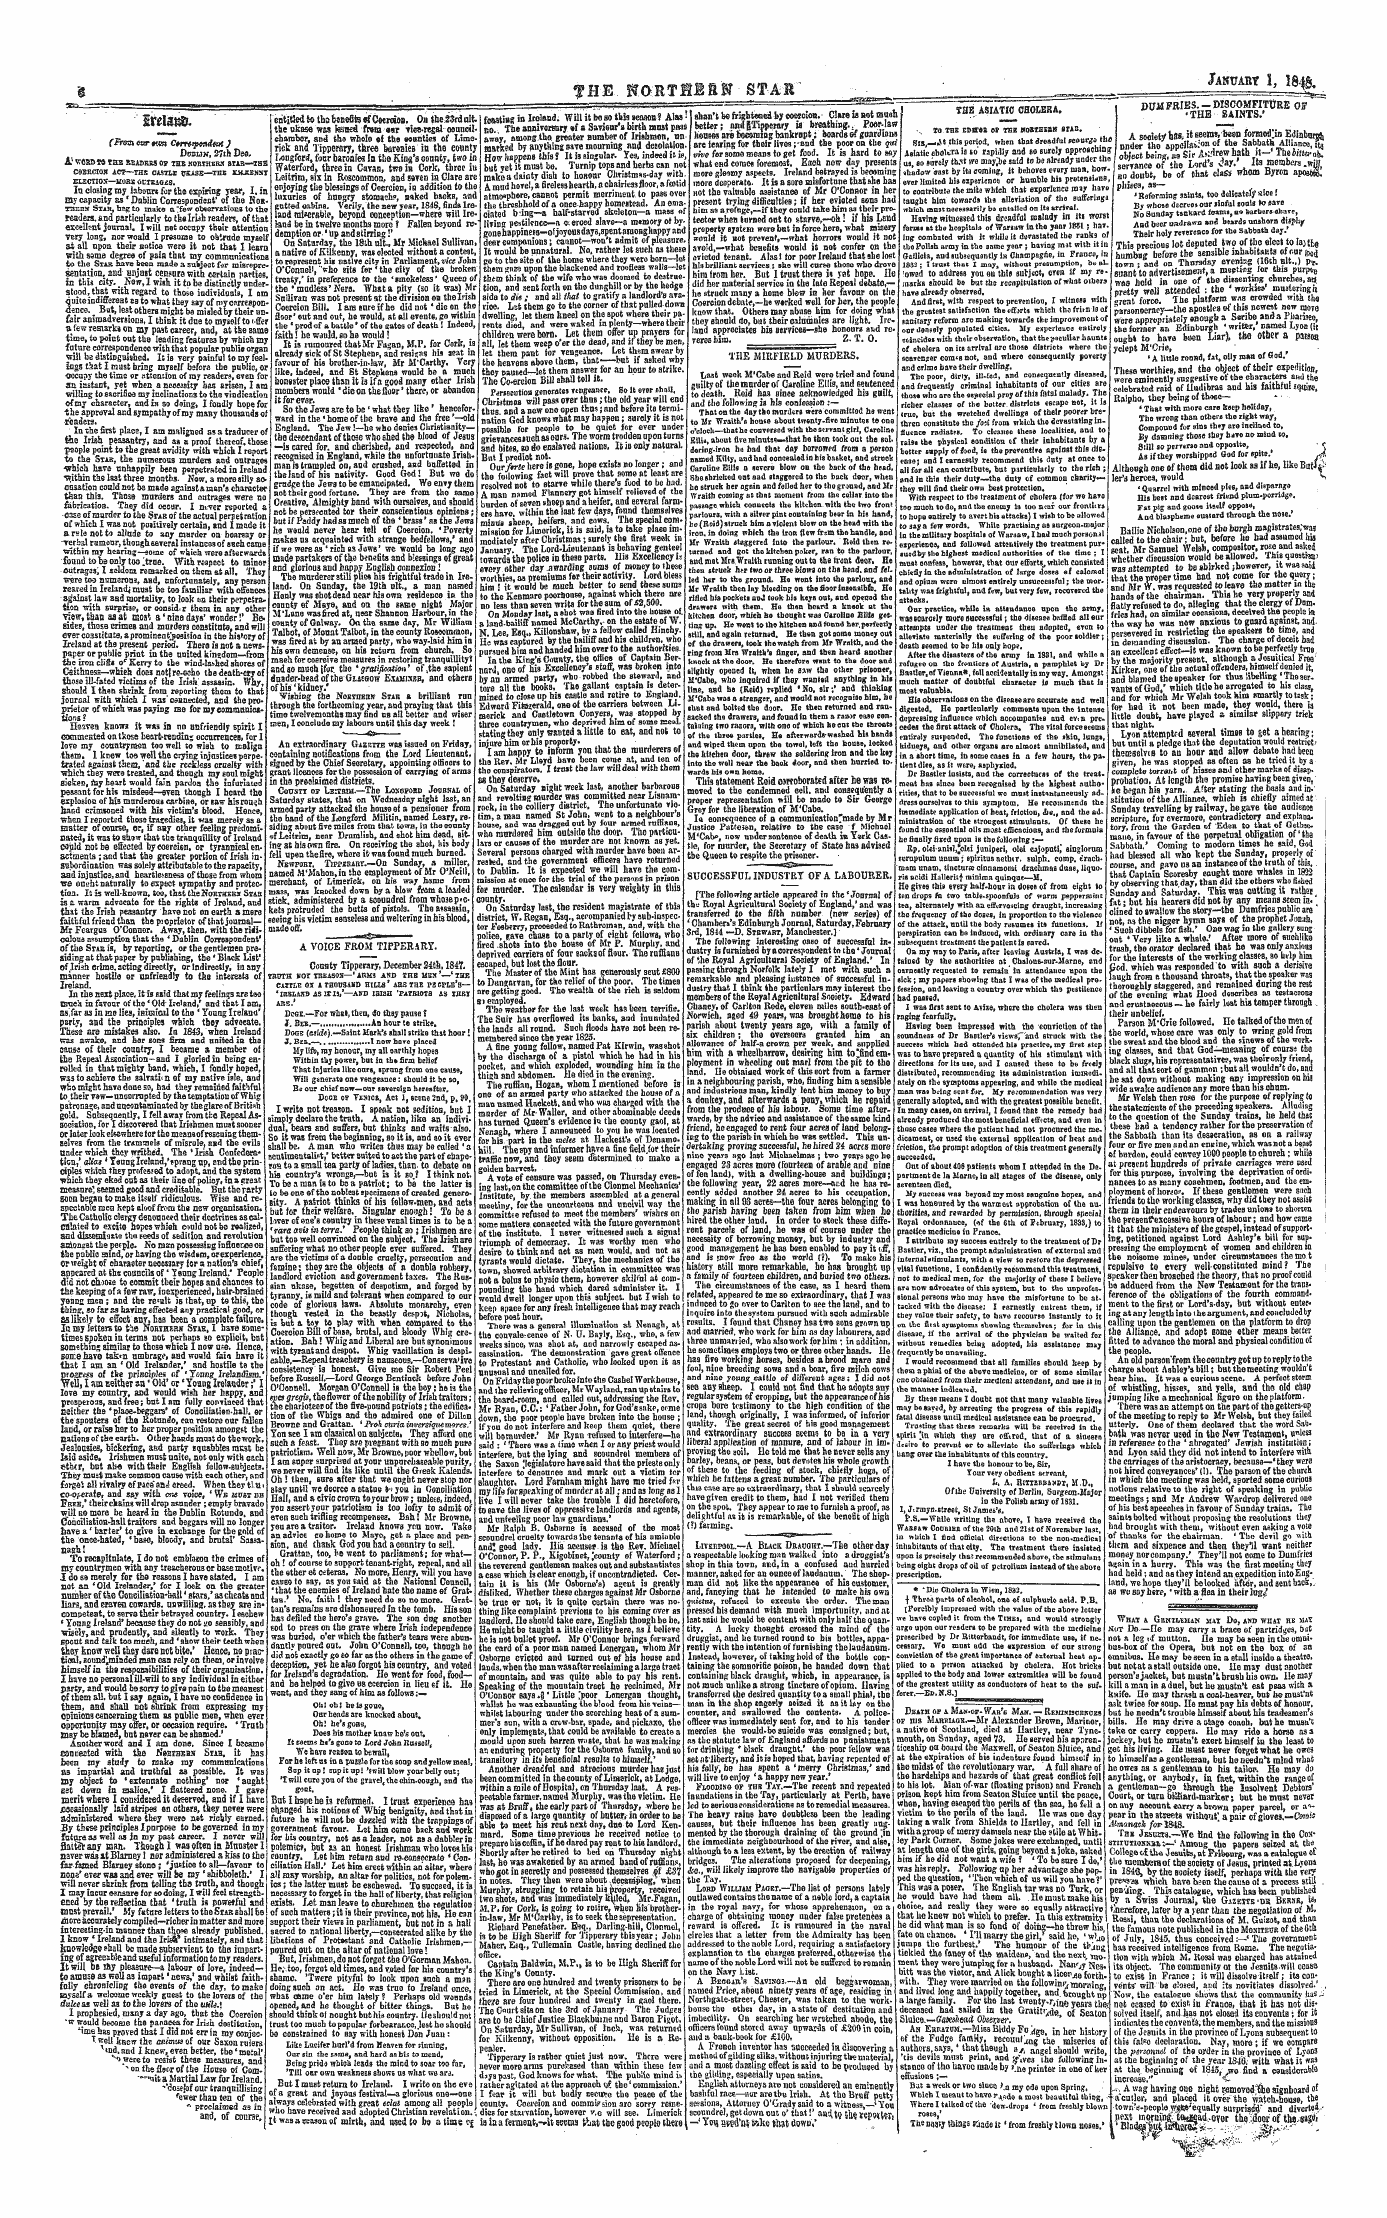 Northern Star (1837-1852): jS F Y, 1st edition - Ln\Zv&